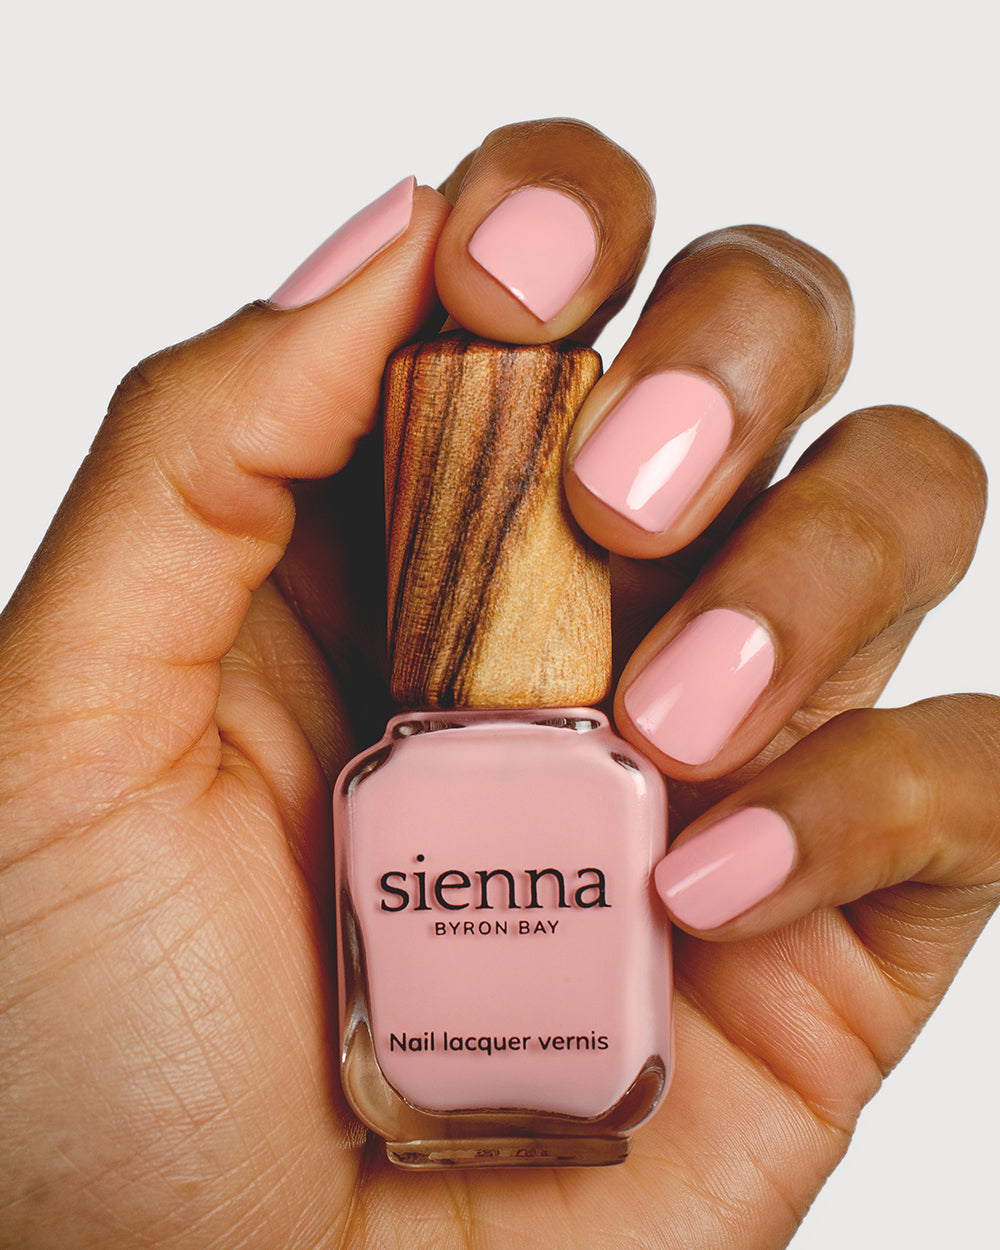 Cherry blossom pink nail polish hand swatch on medium skin tone holding sienna bottle close-up